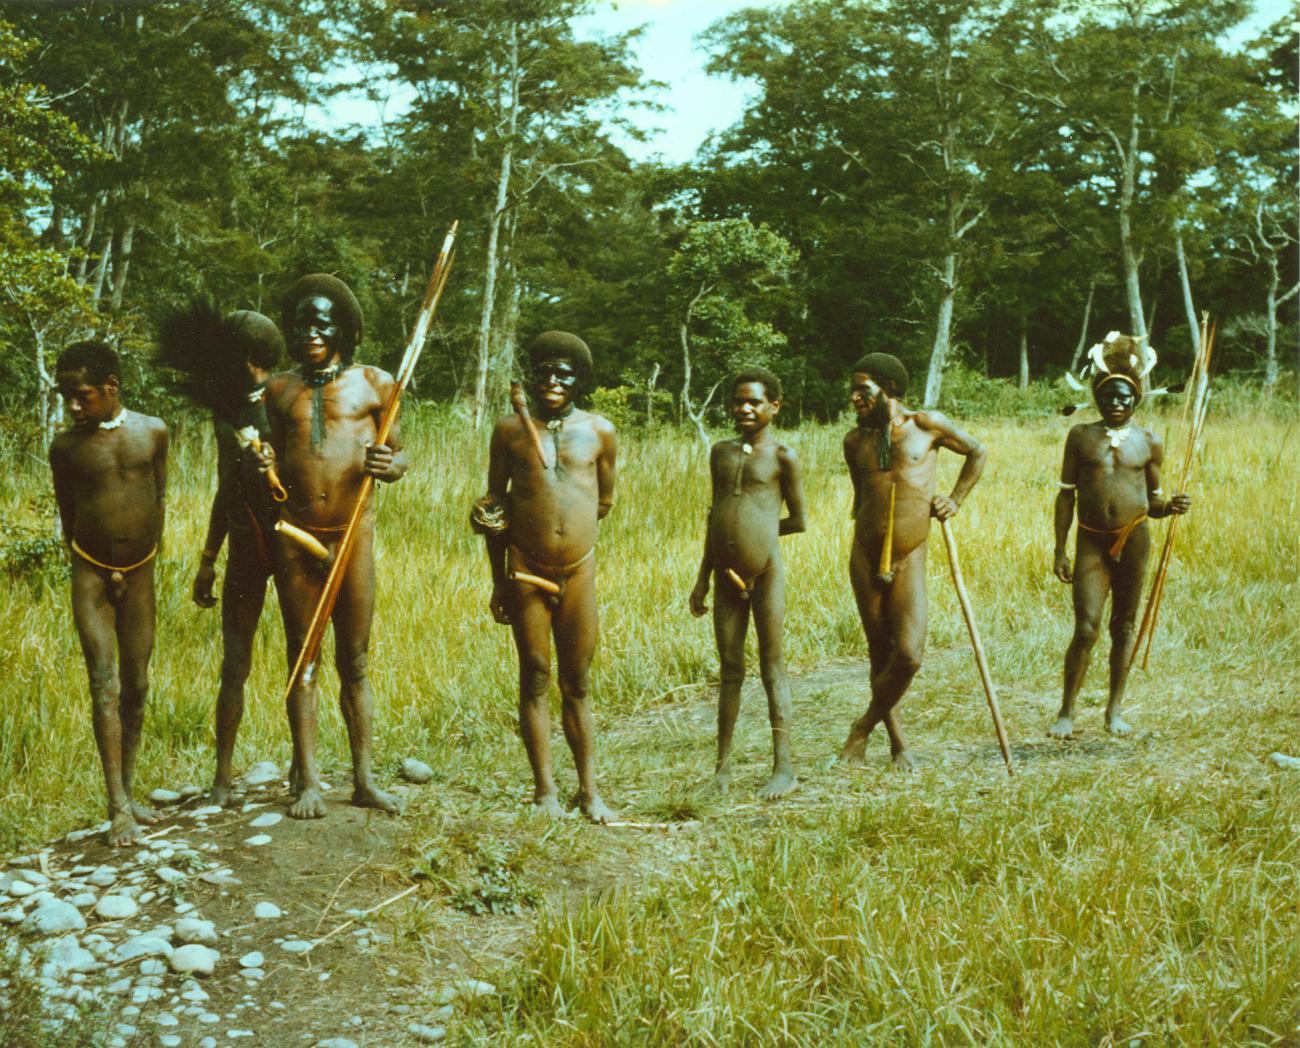 BD/39/19 - 
groep Papua-mannen
